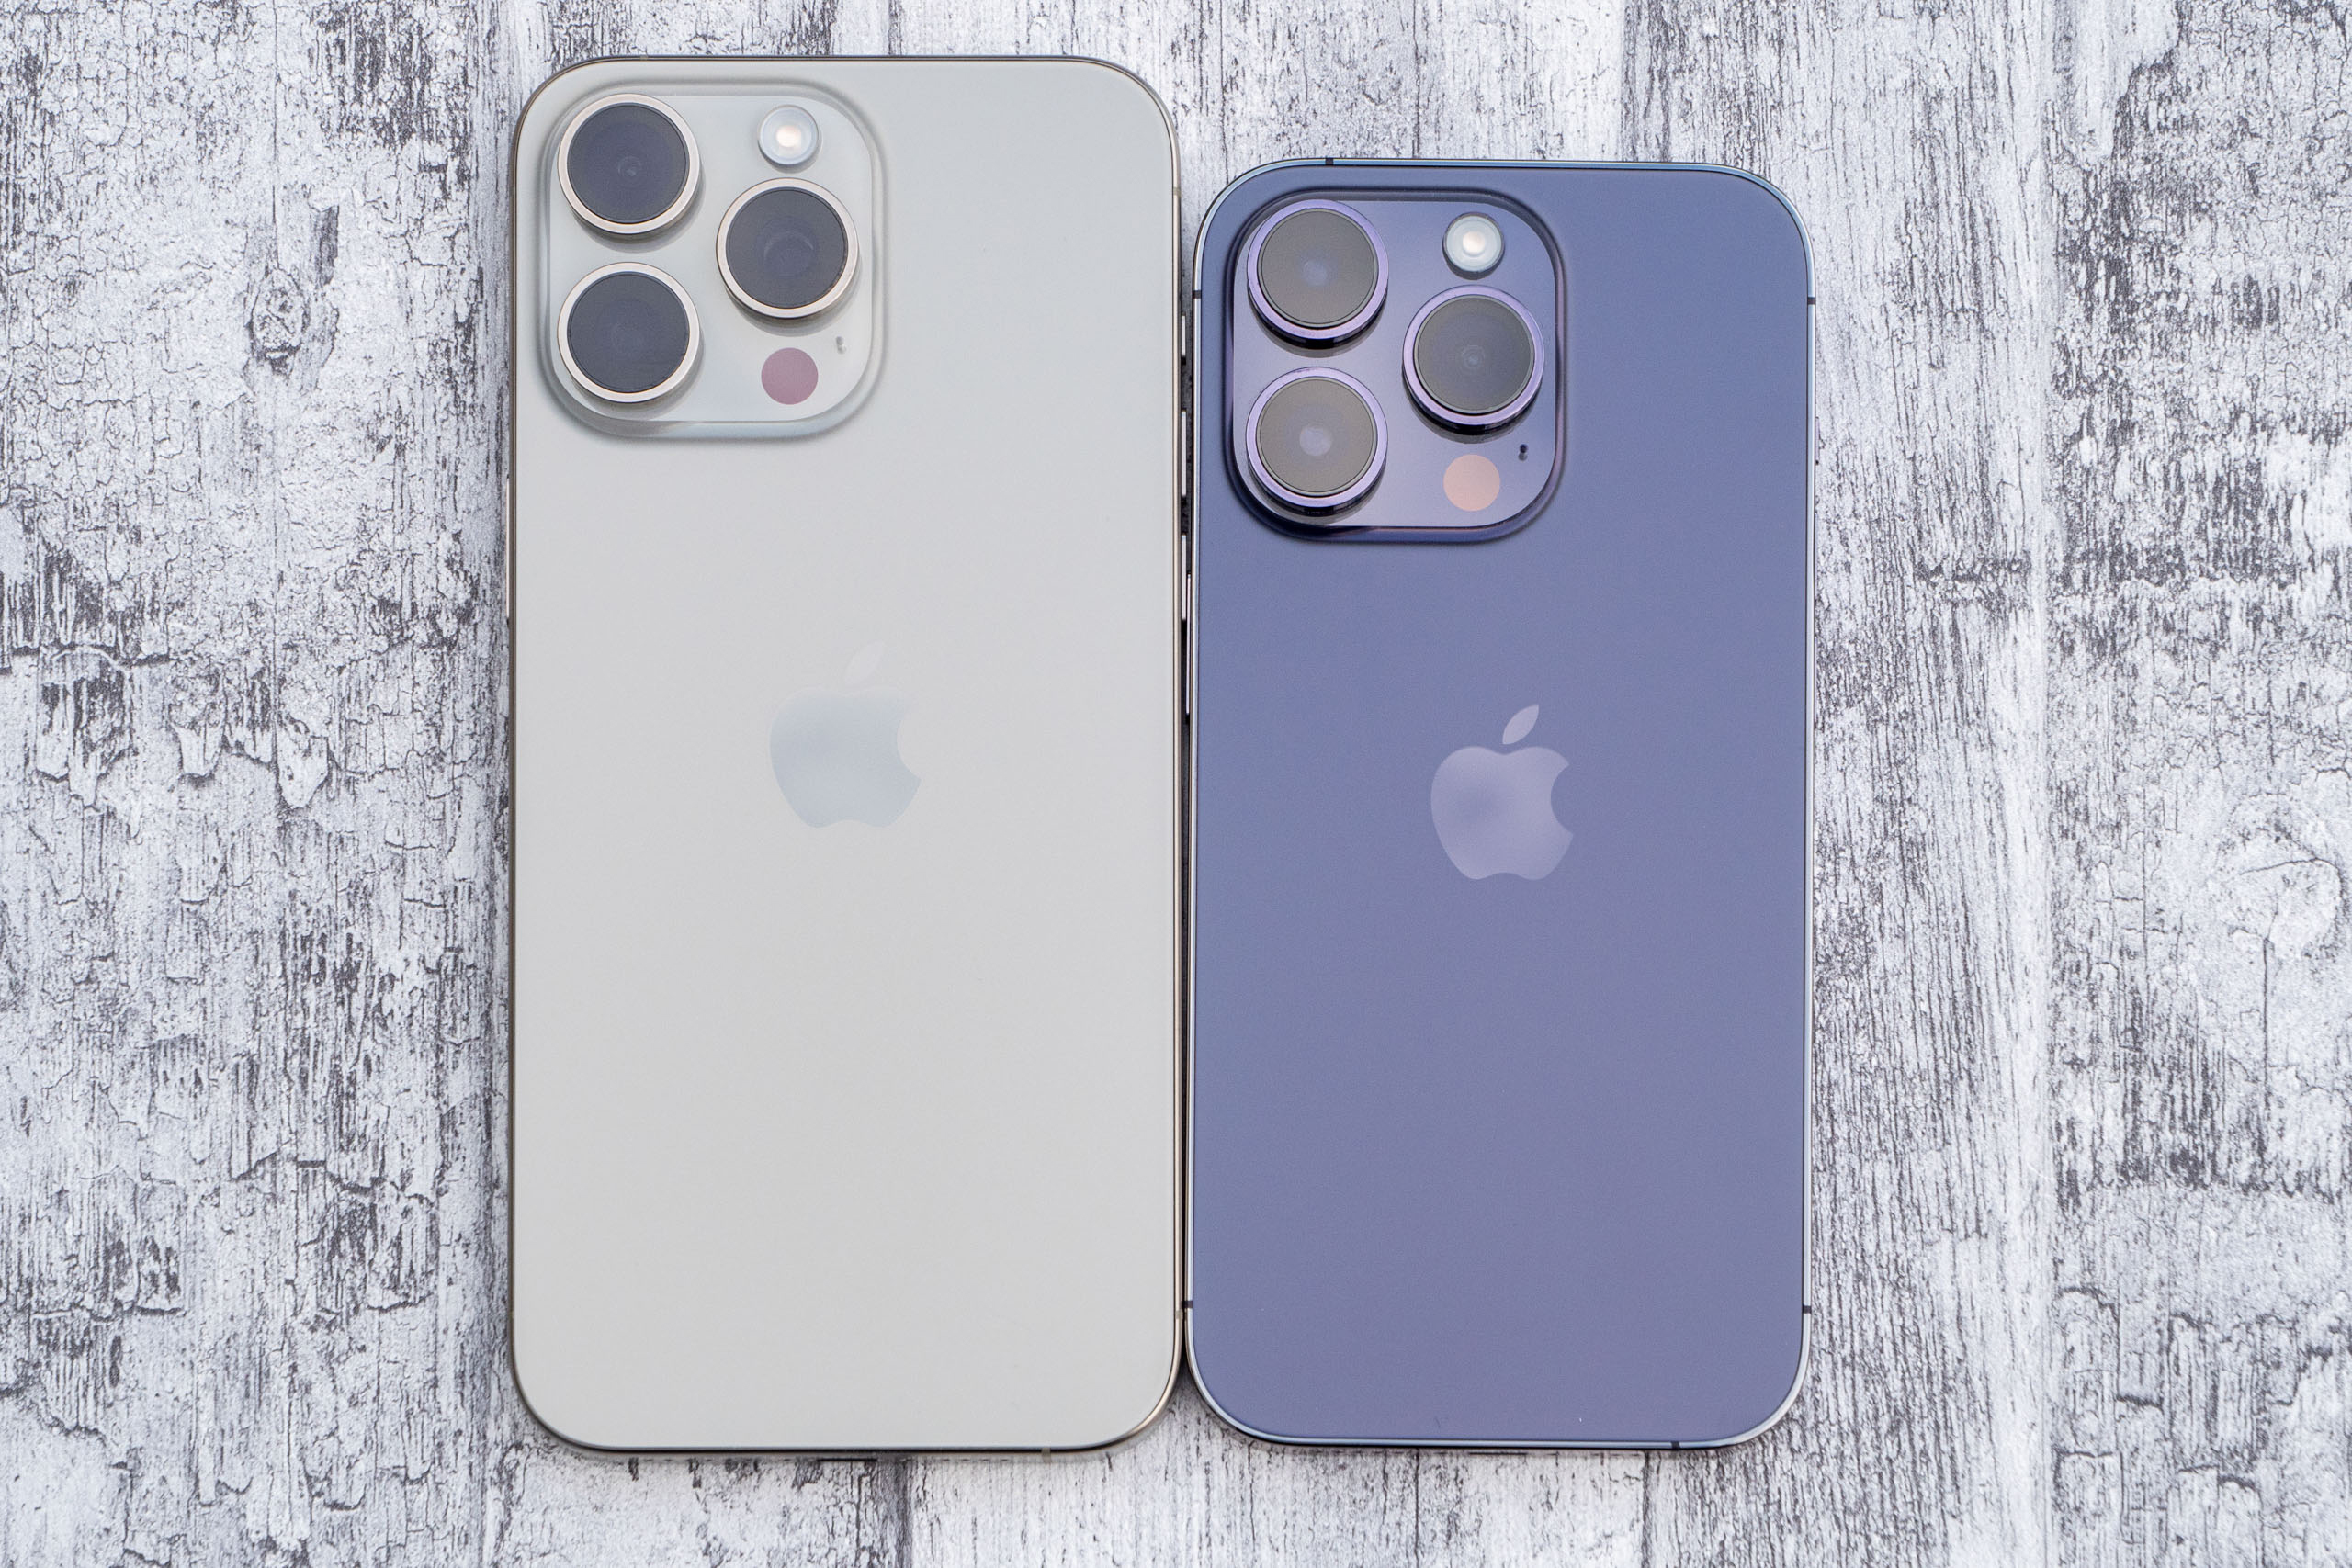 iPhone 14 Pro Max vs iPhone 15 Pro Max